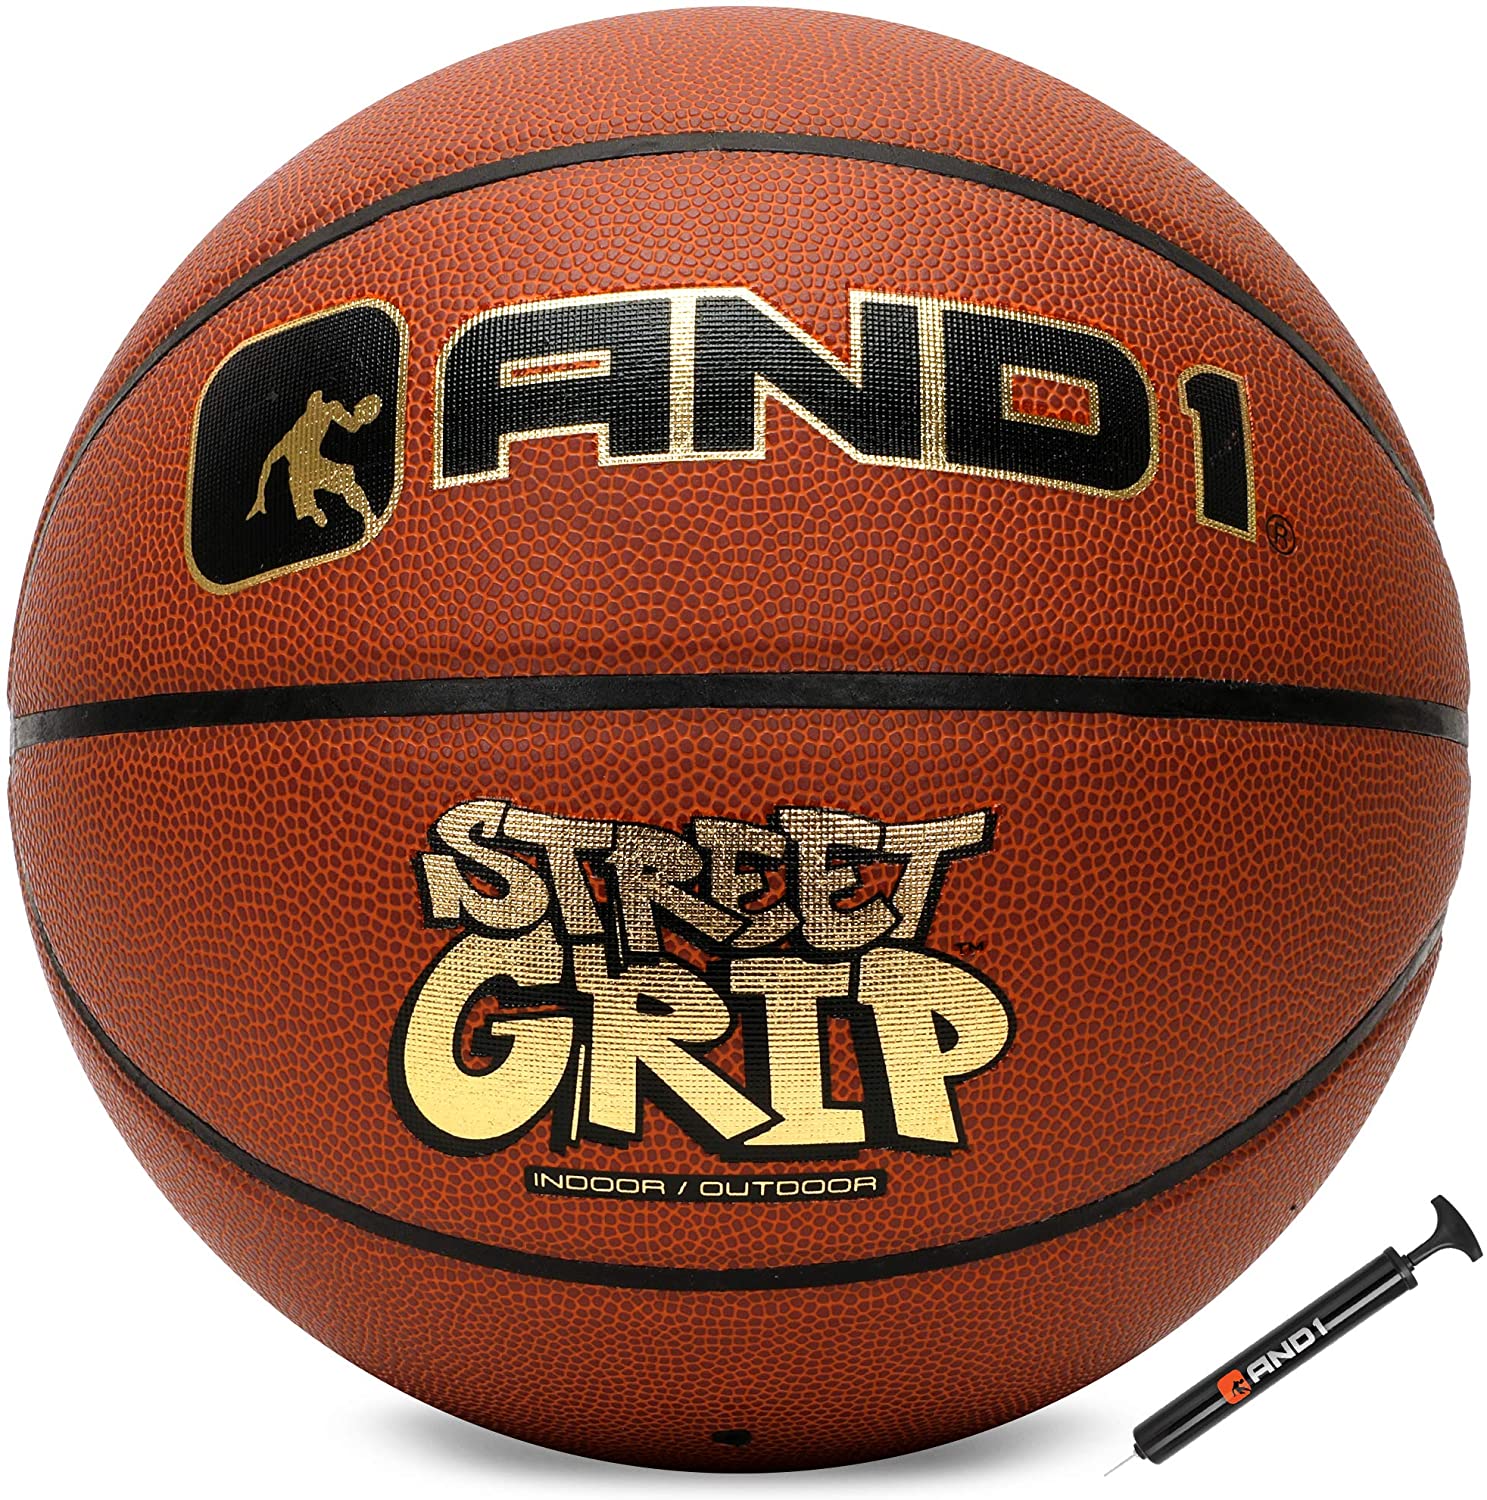 AND1 Street Grip Premium